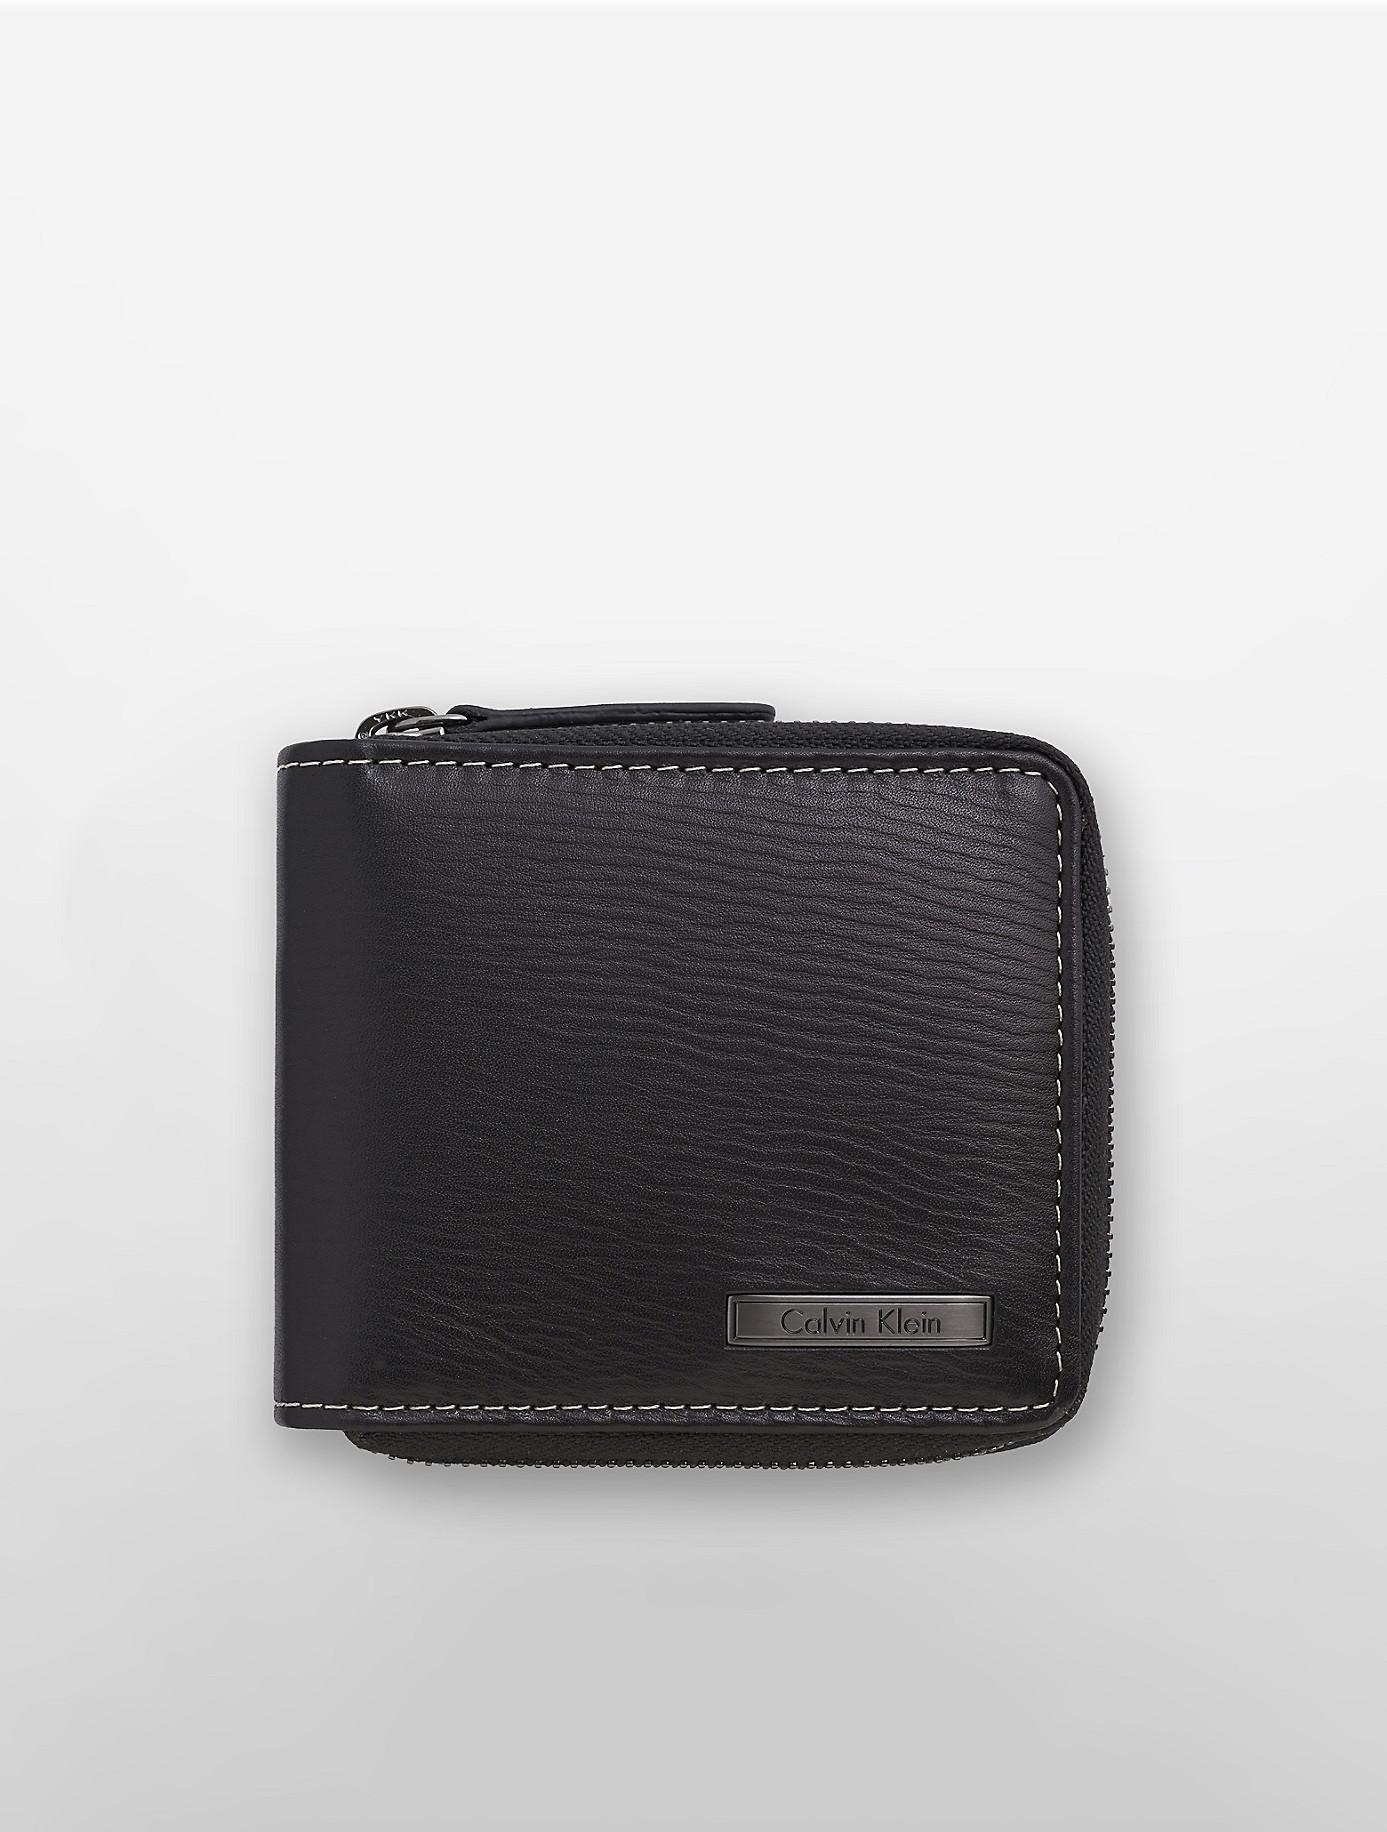 Calvin Klein Leather Textured Zip Wallet in Black for Men | Lyst